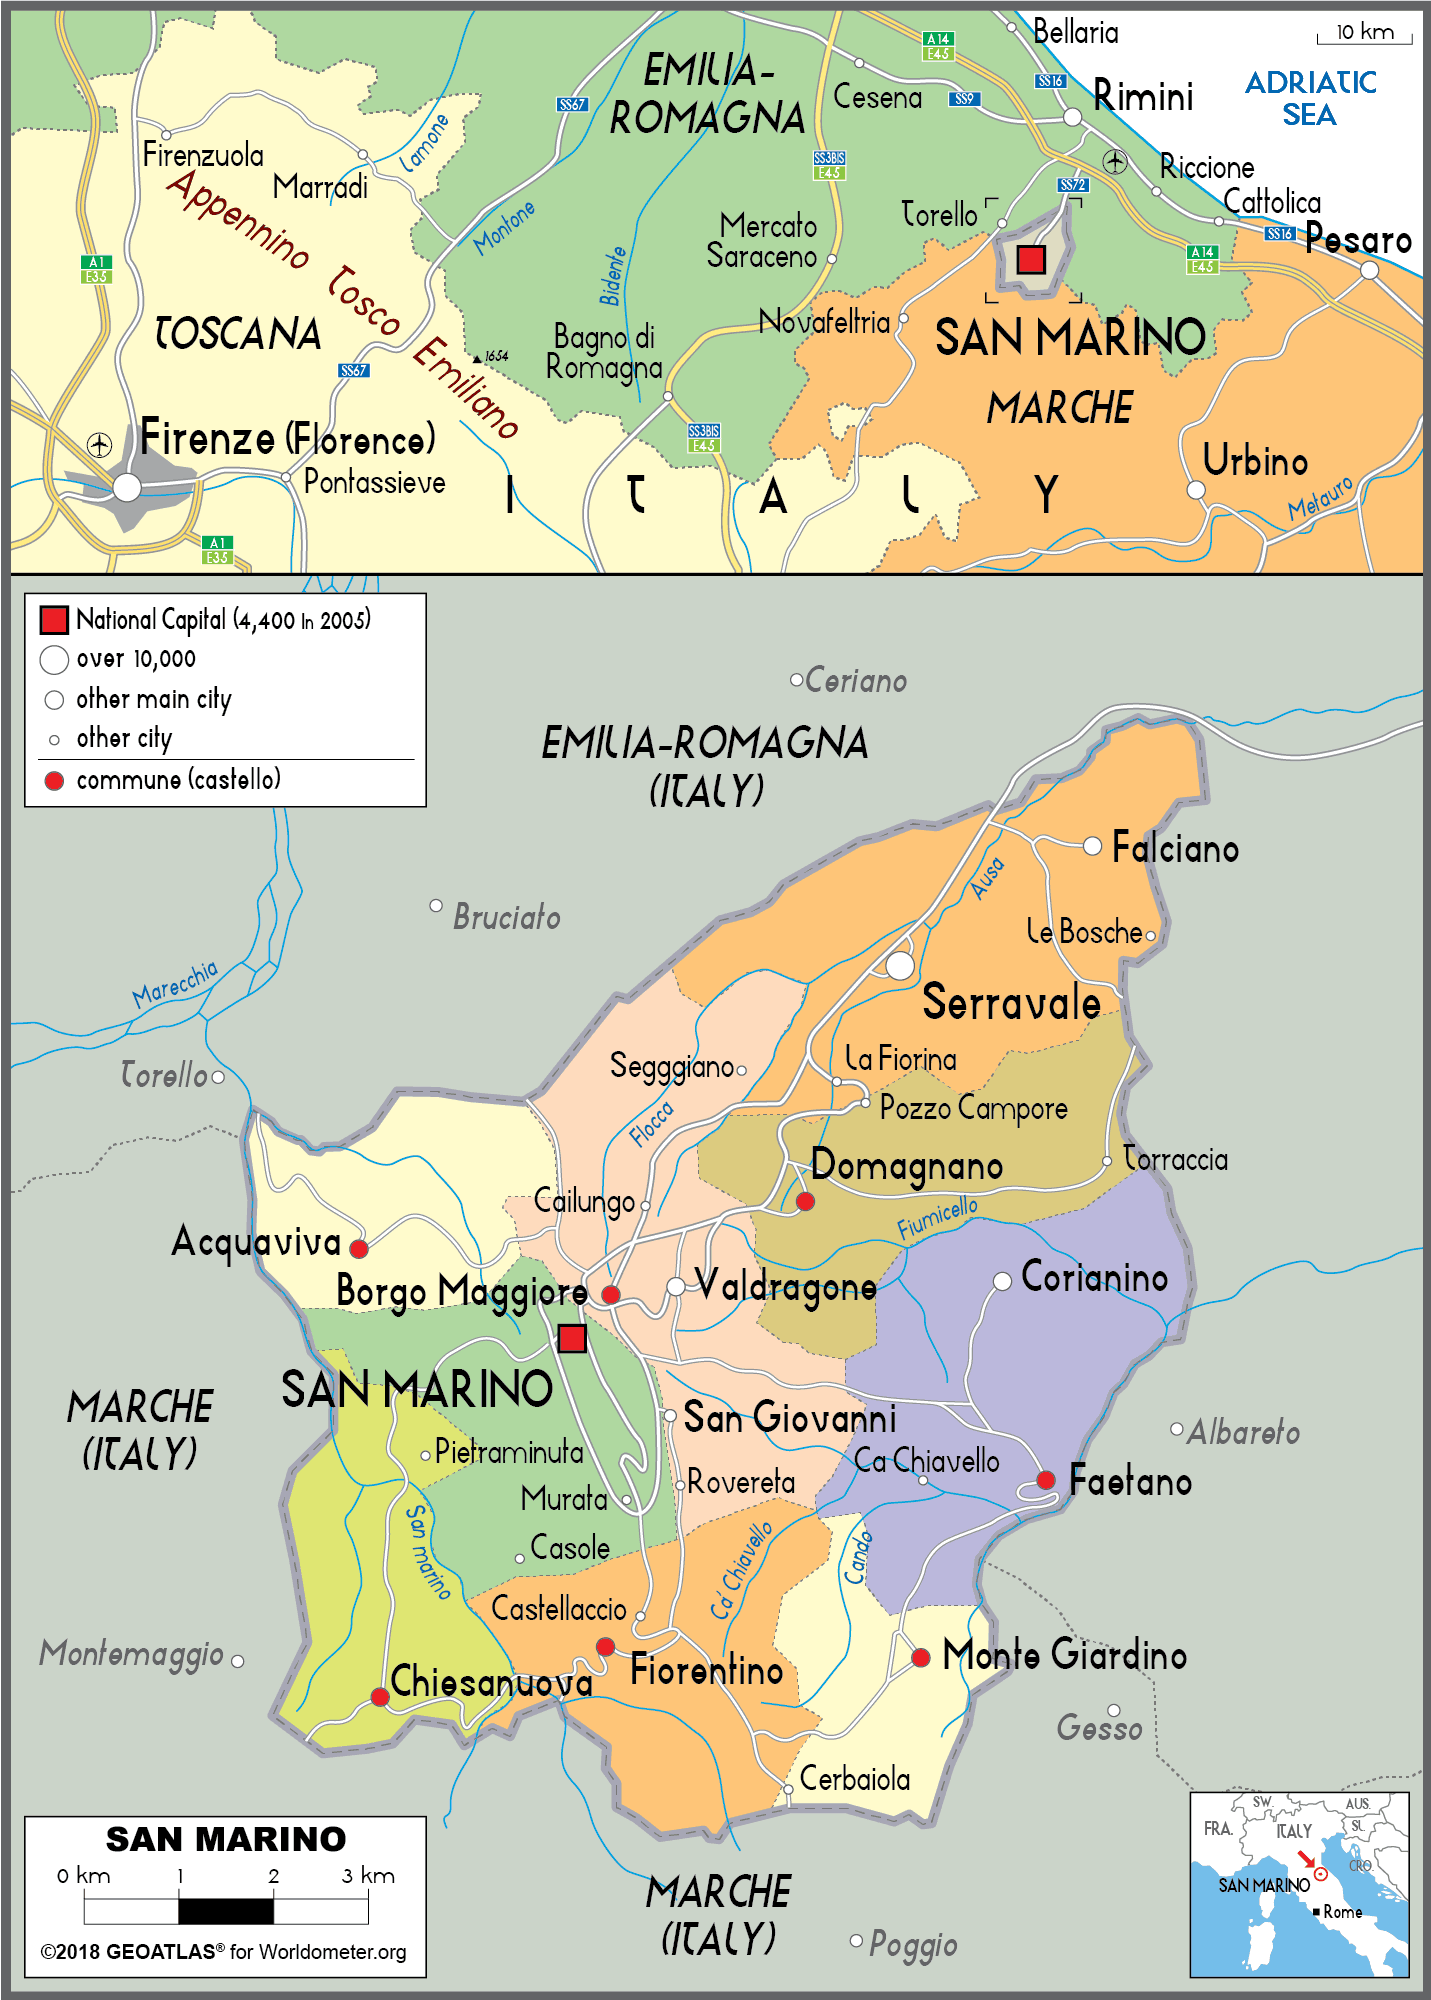 Сан марино где. Республика Сан-Марино на карте. Сан-Марино государство на карте. Географическое расположение Сан Марино. Сан Марино политическая карта.